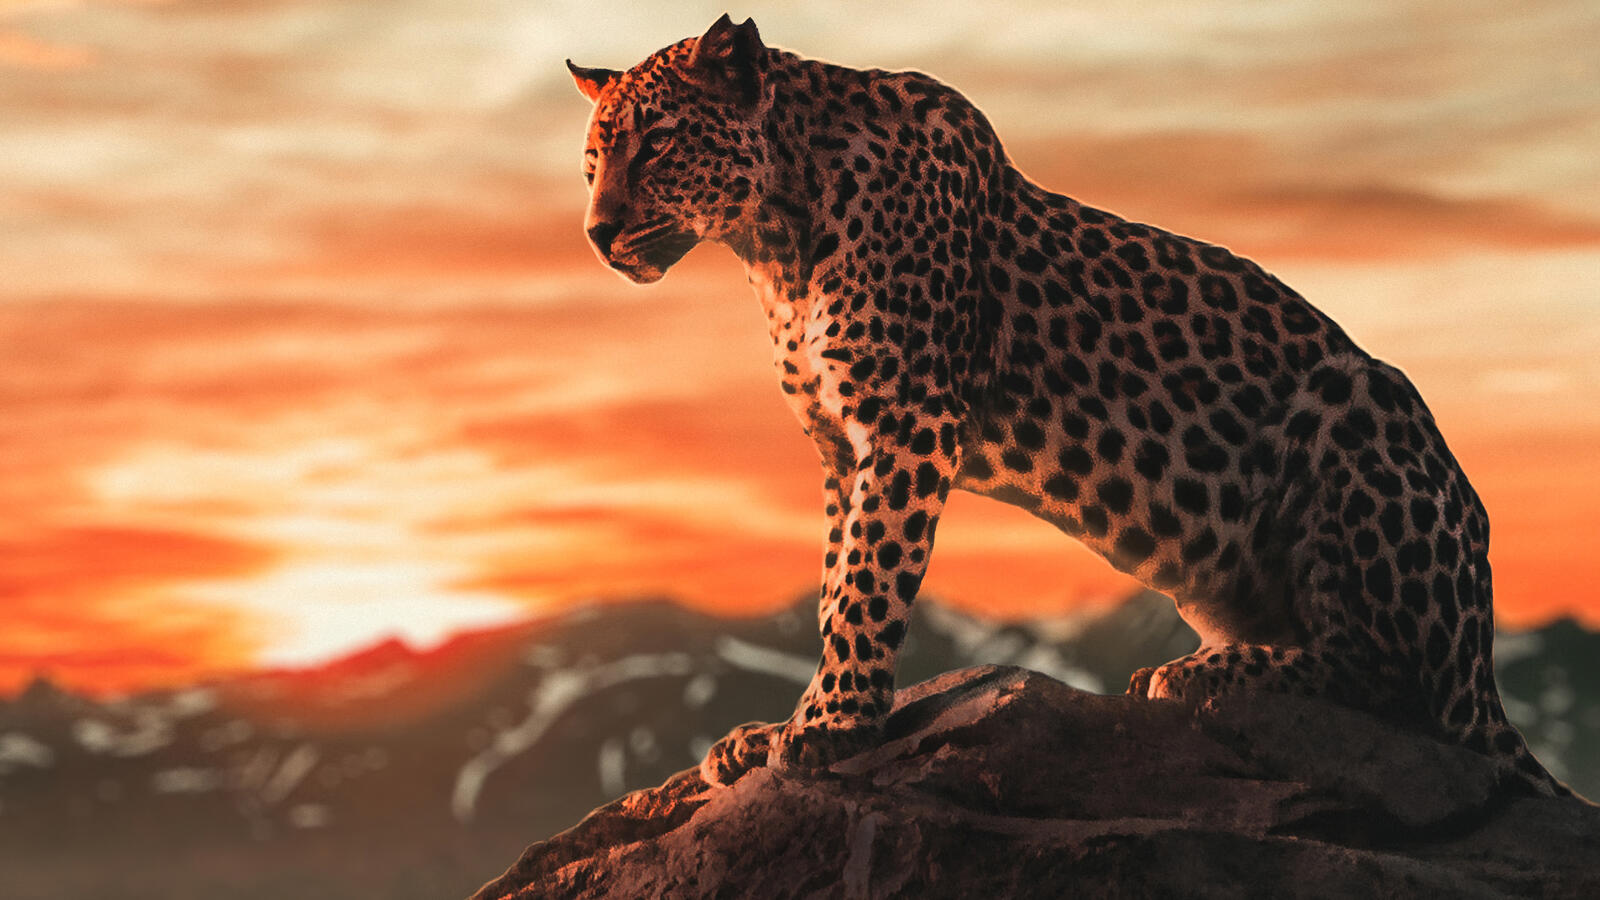 Wallpapers cheetah animals cats on the desktop